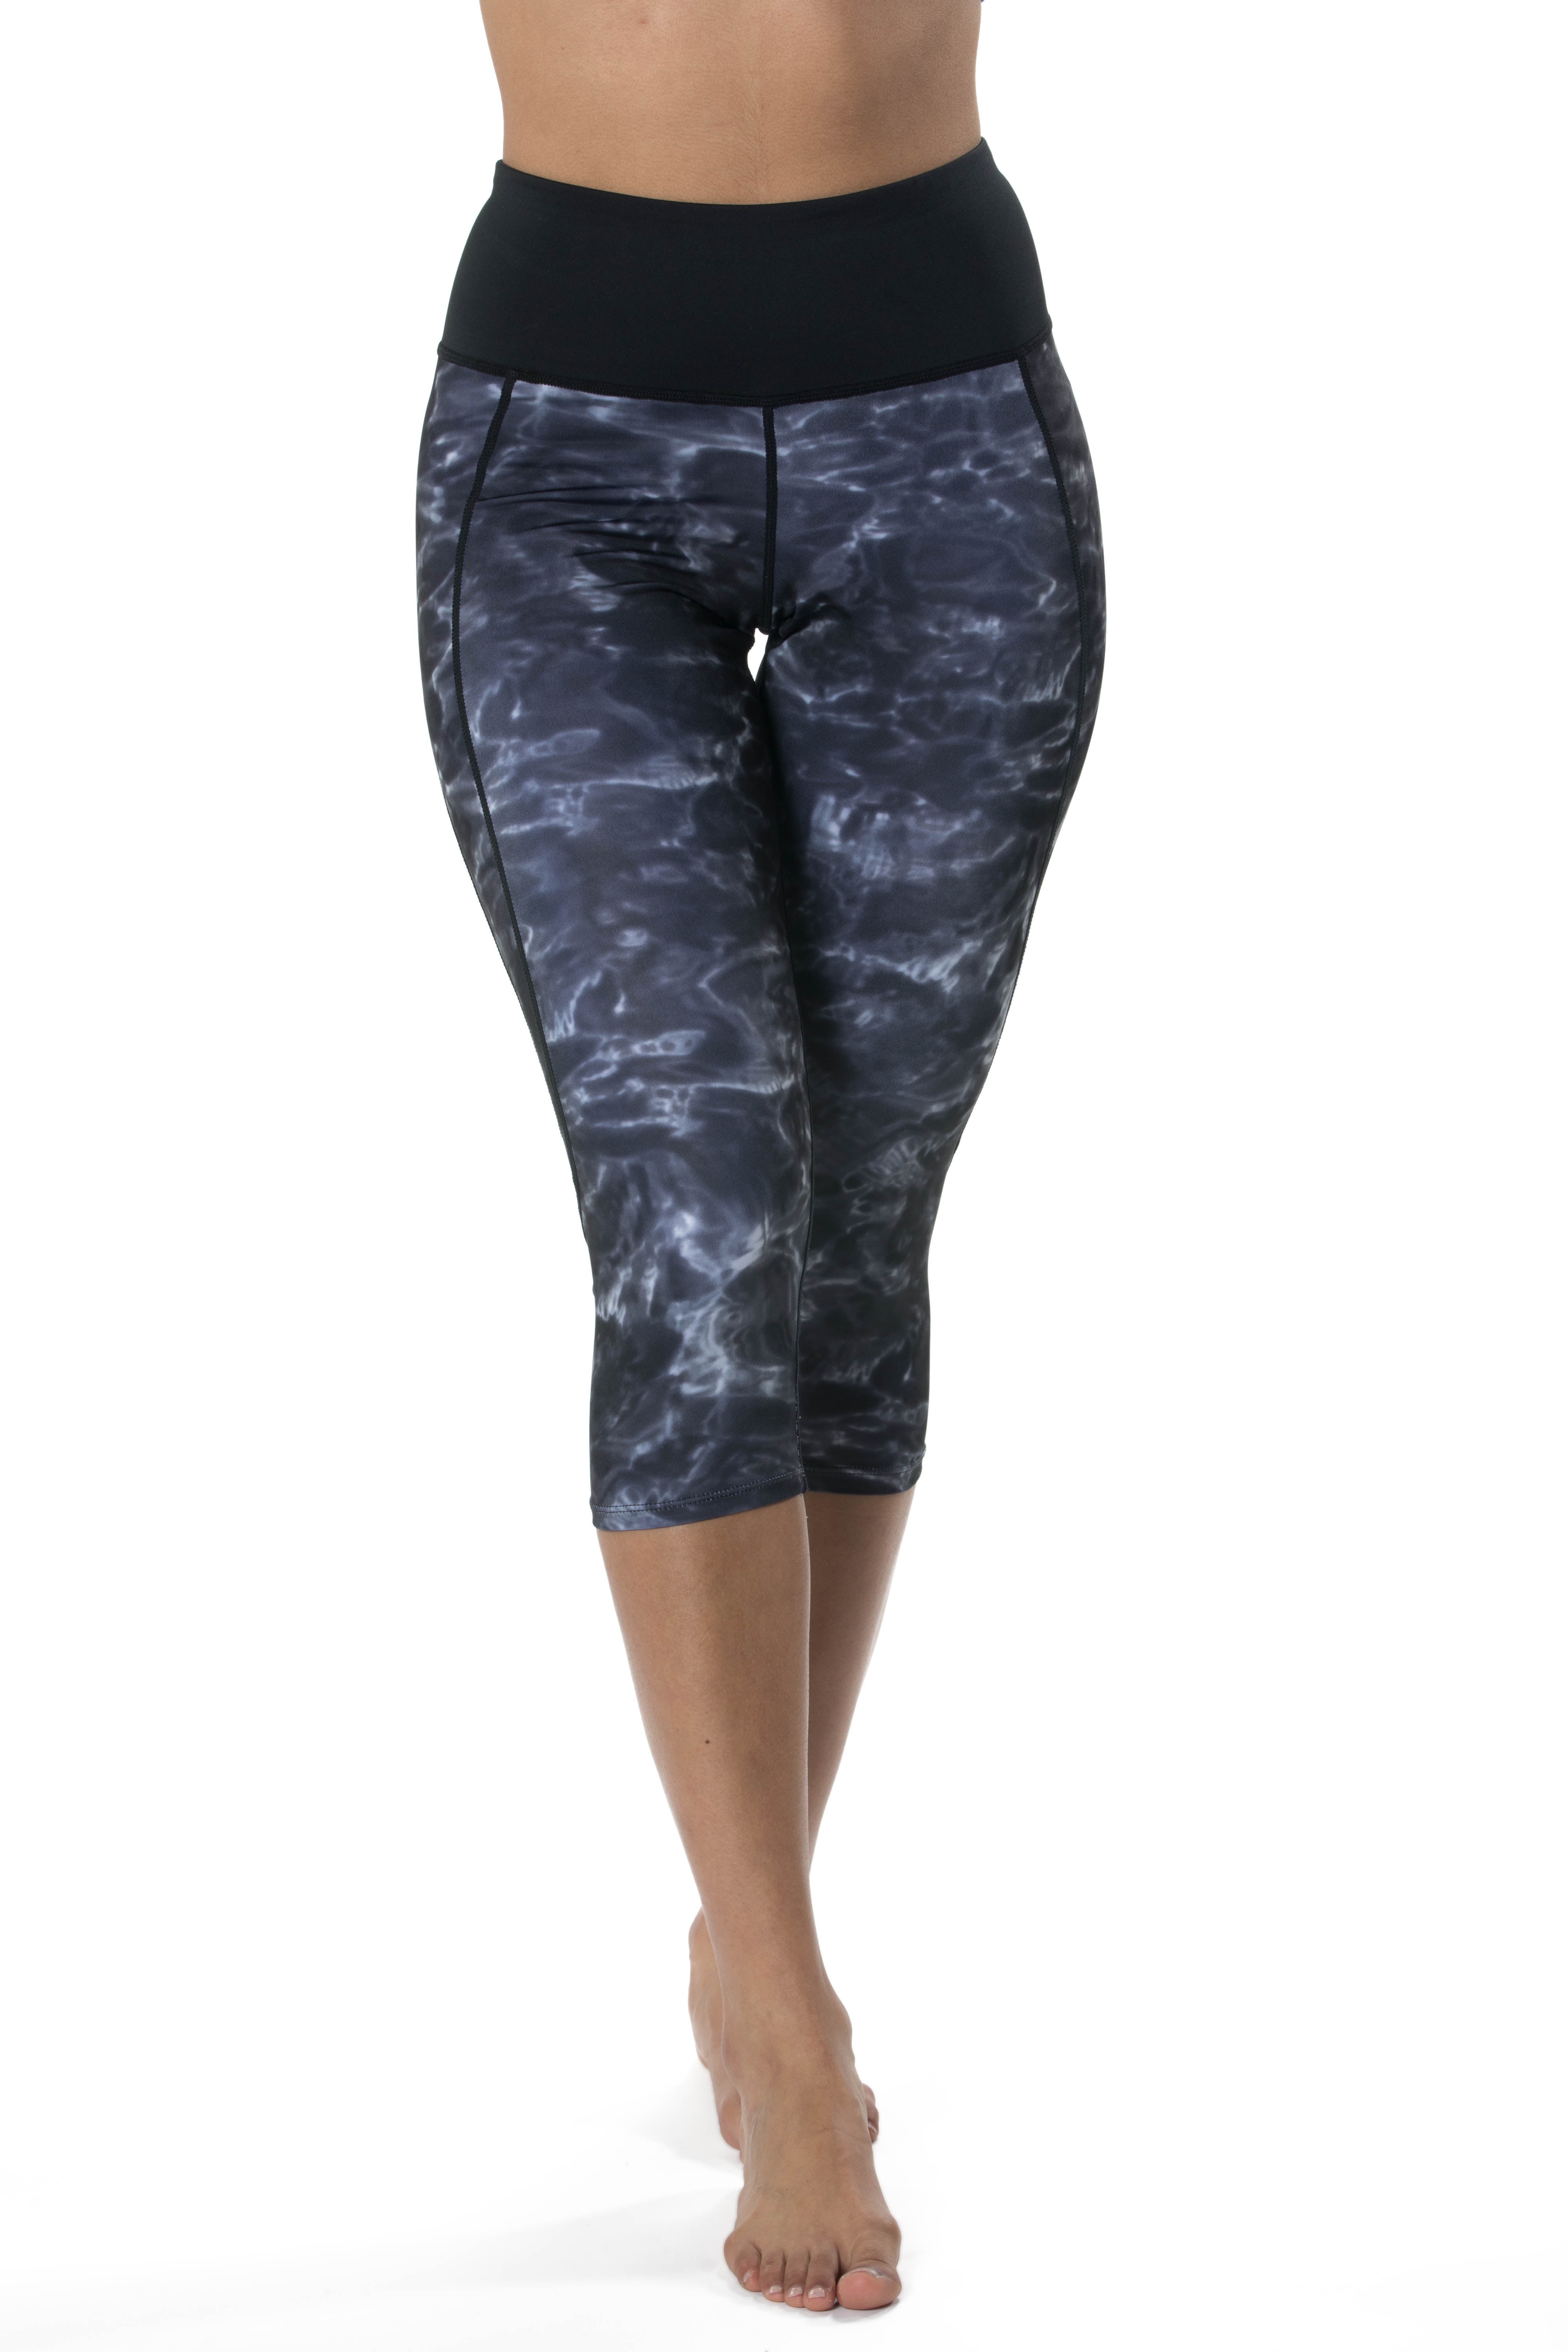 Aqua Design High Waisted Capri Leggings for Women: Liquid Purple/Black size  X-Large 